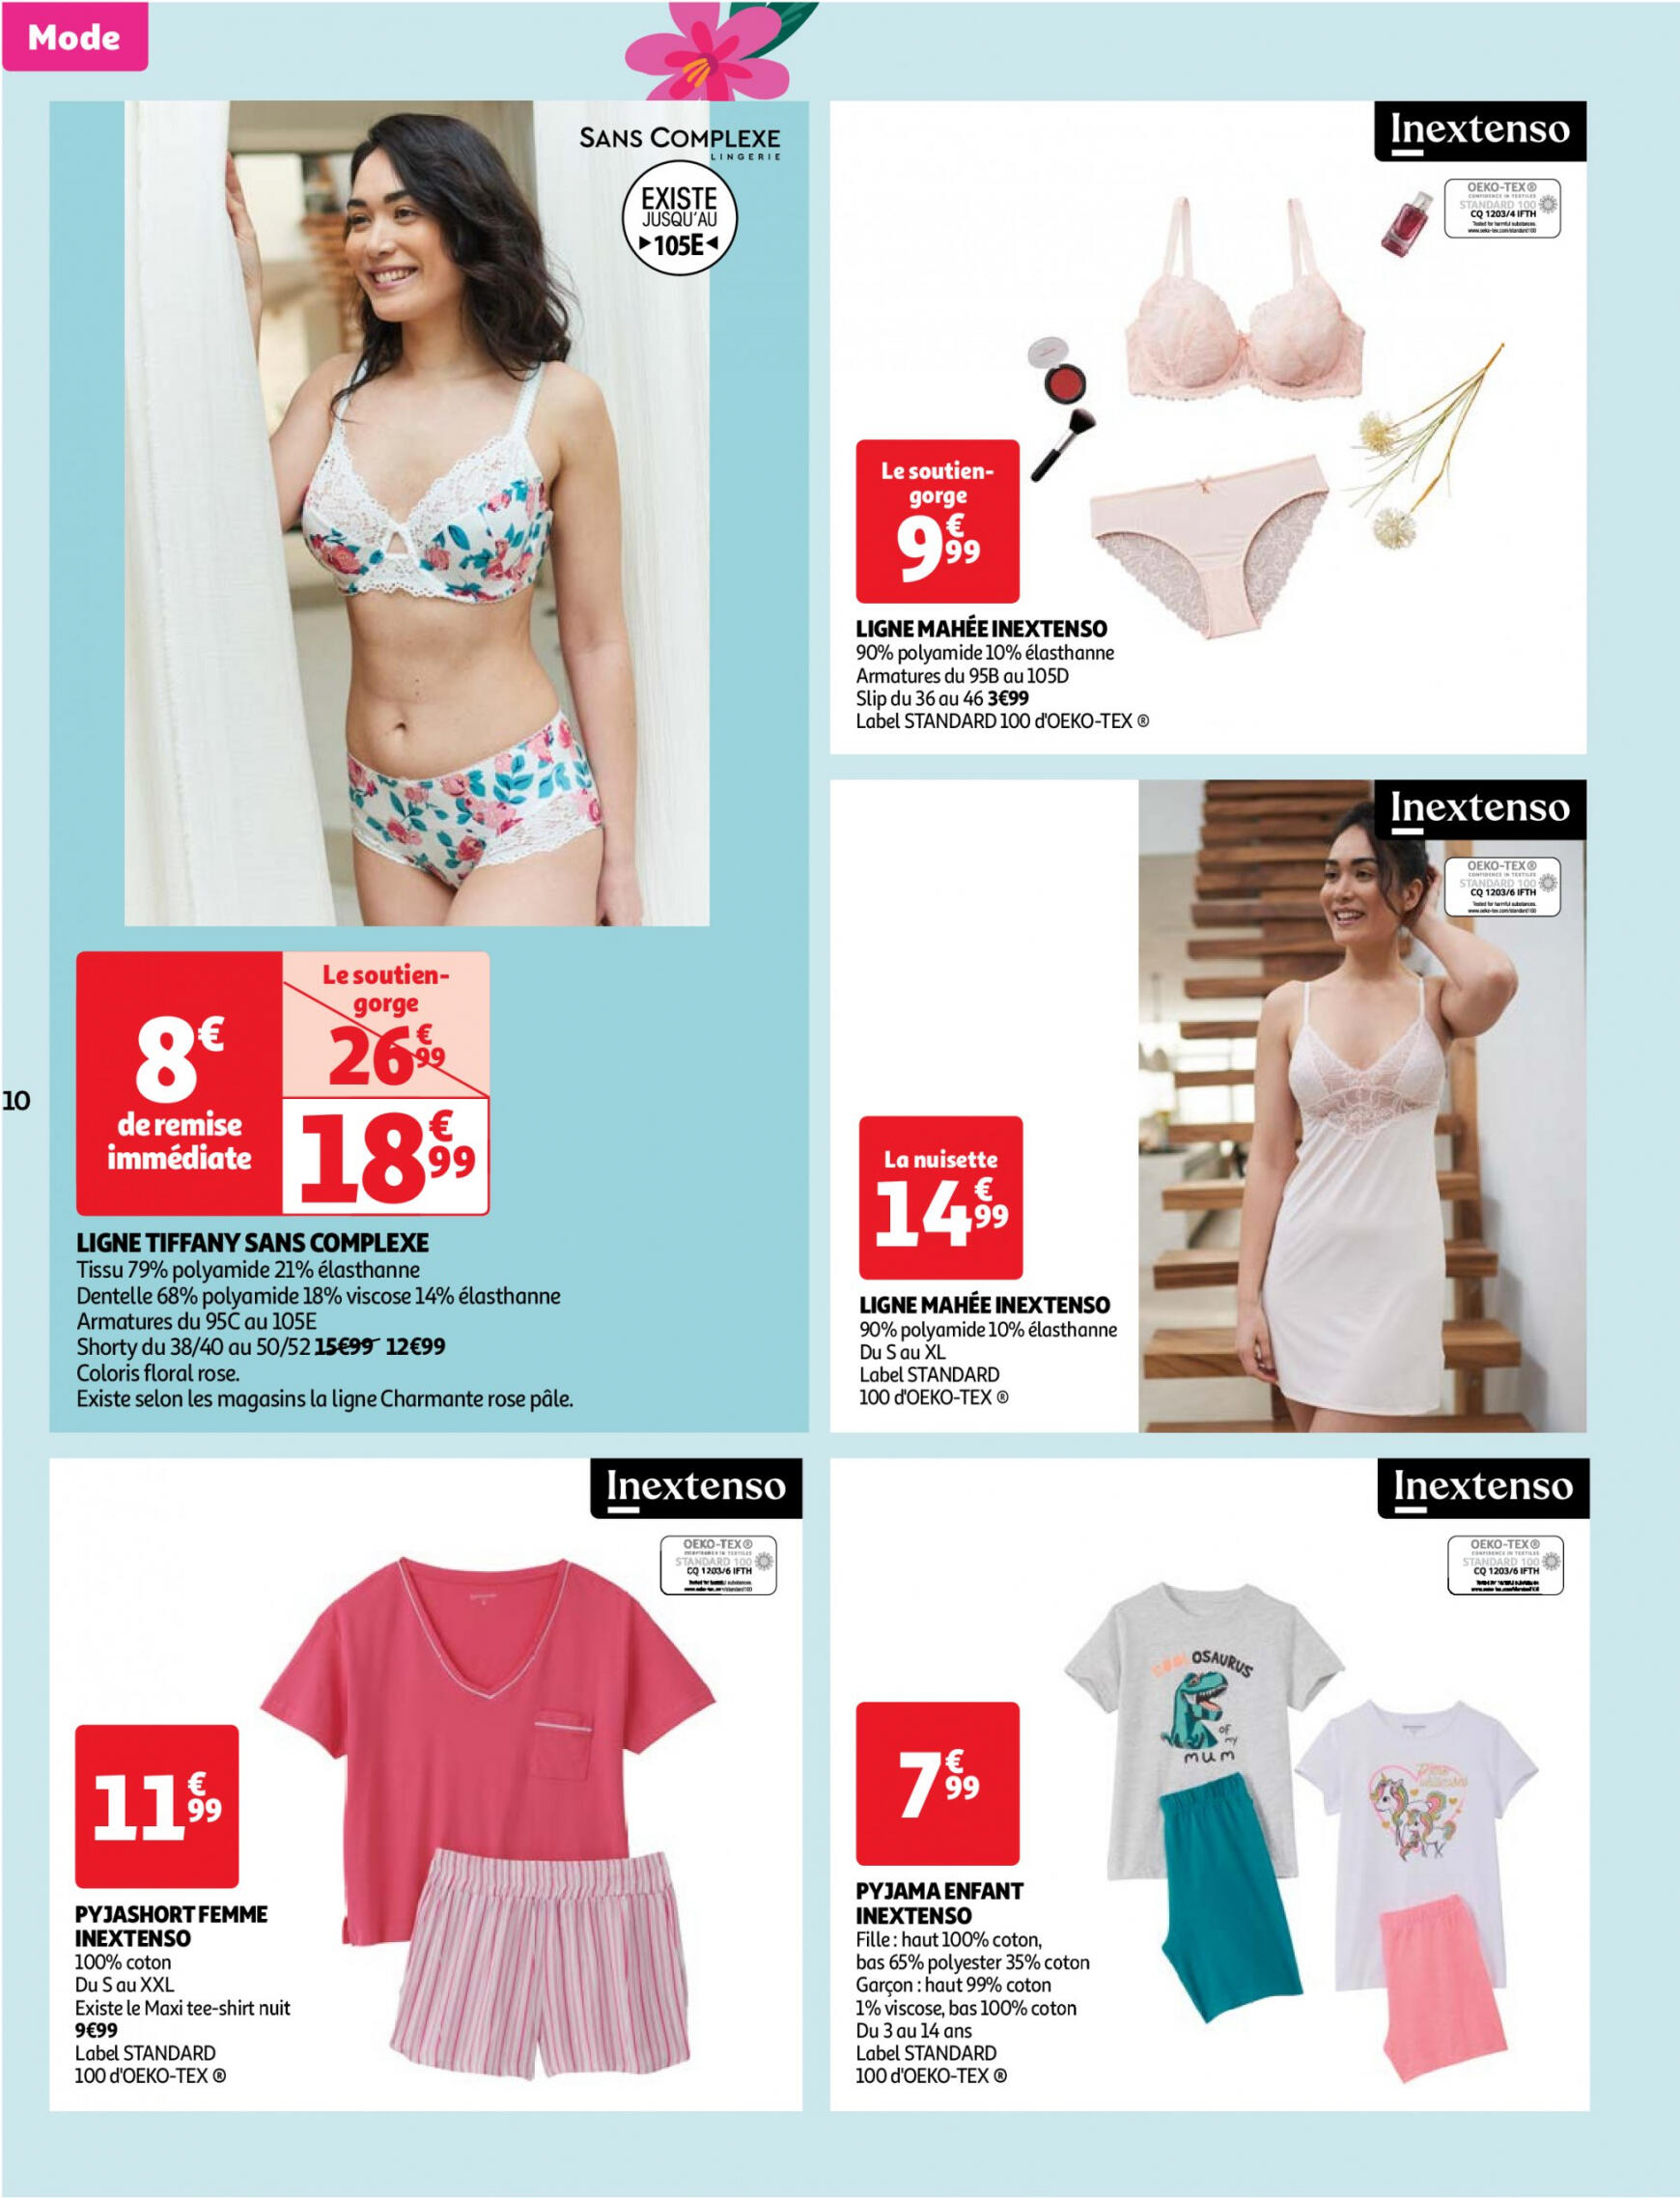 auchan - Prospectus Auchan - Merci maman actuel 14.05. - 26.05. - page: 10